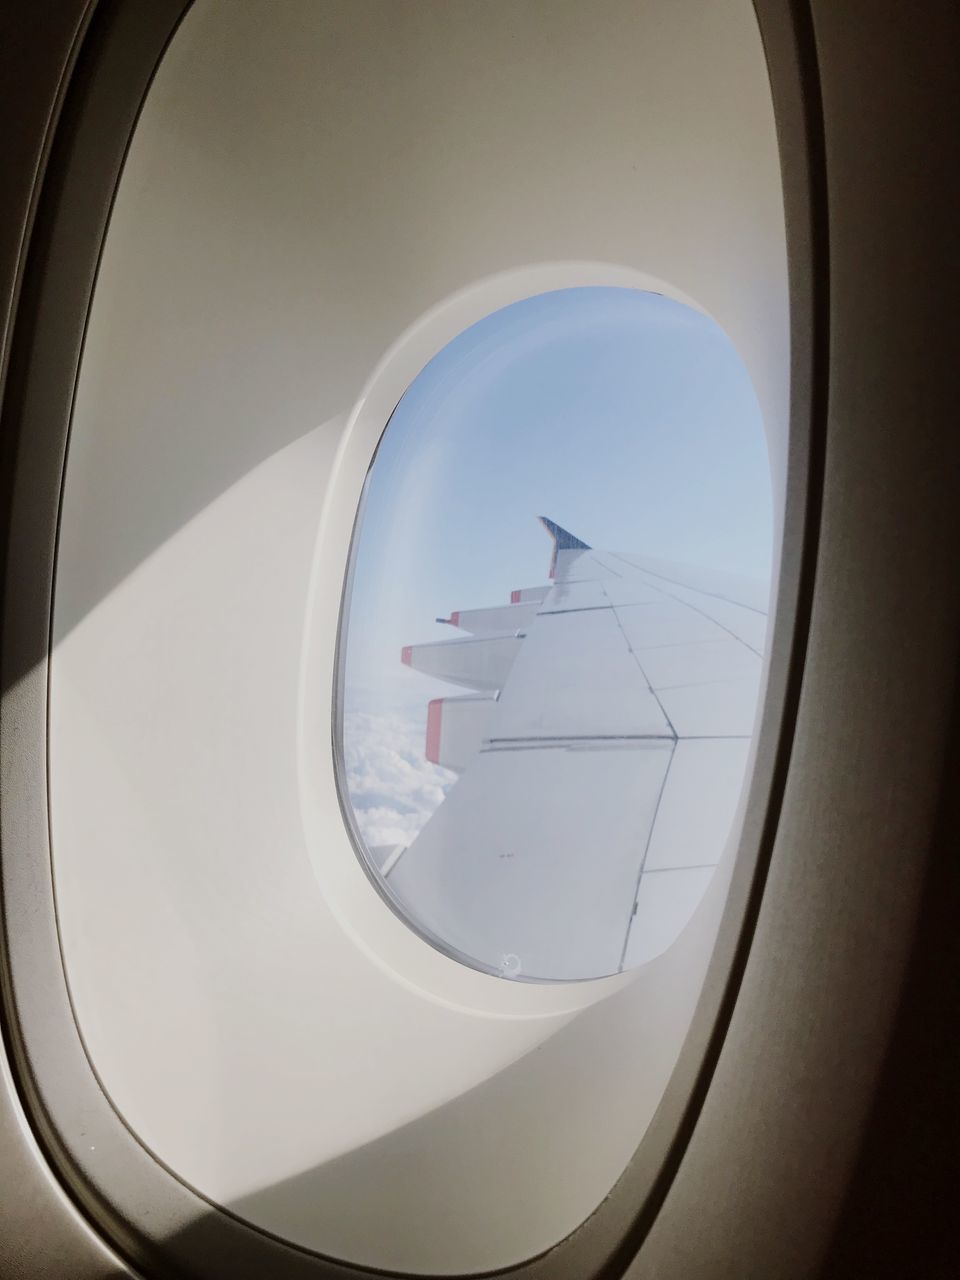 AIRPLANE WING SEEN THROUGH WINDOW